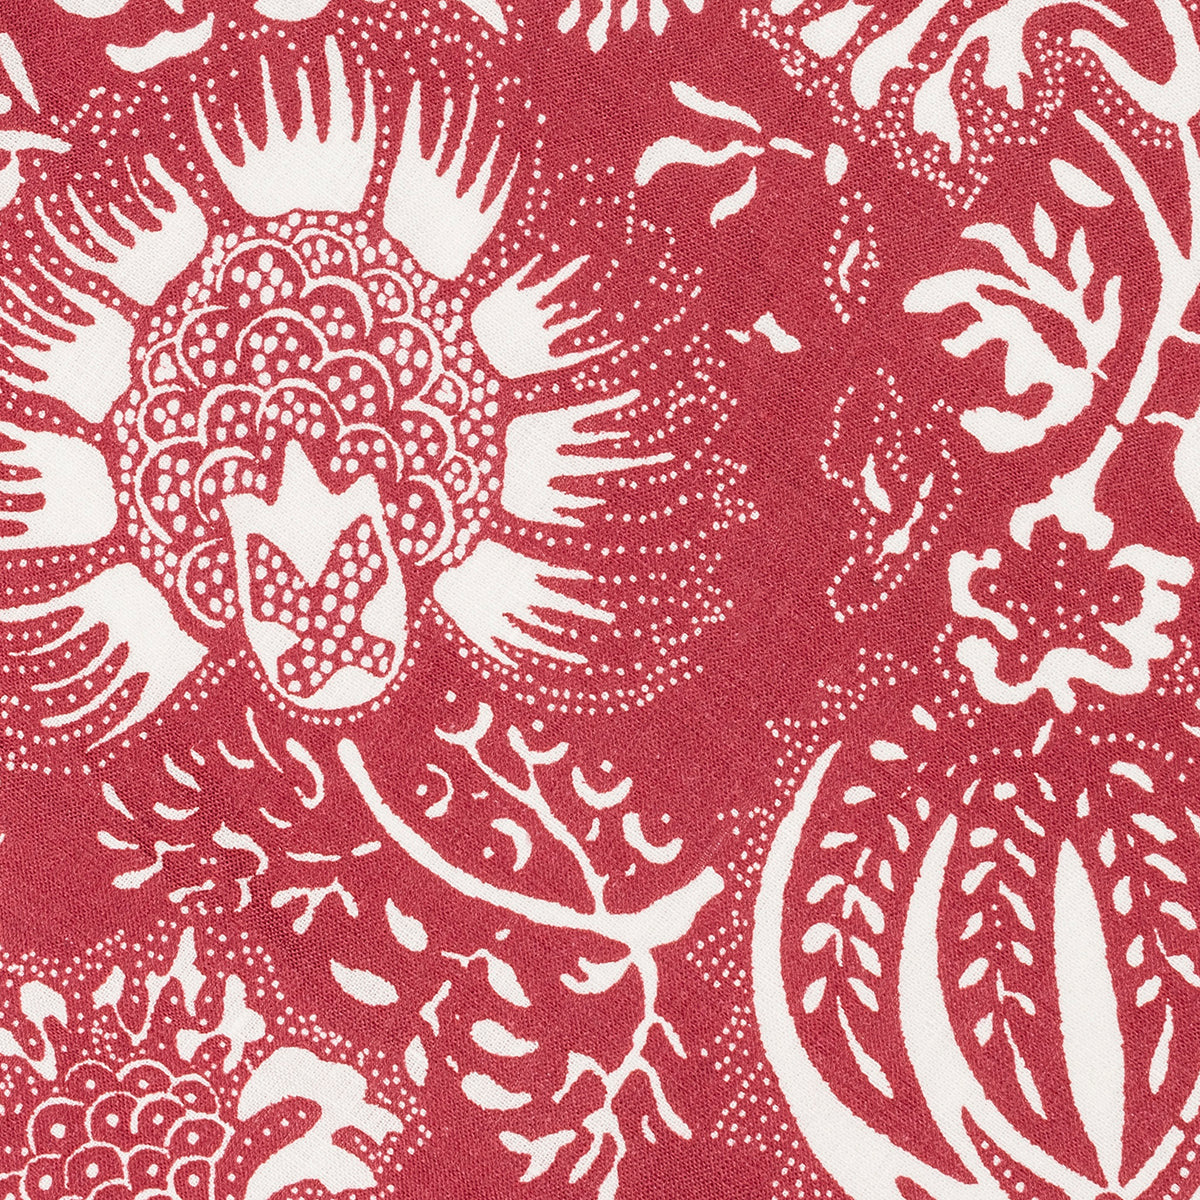 Swatch Sample of Matouk Granada Linen Tissue Box Cover in Scarlet Color